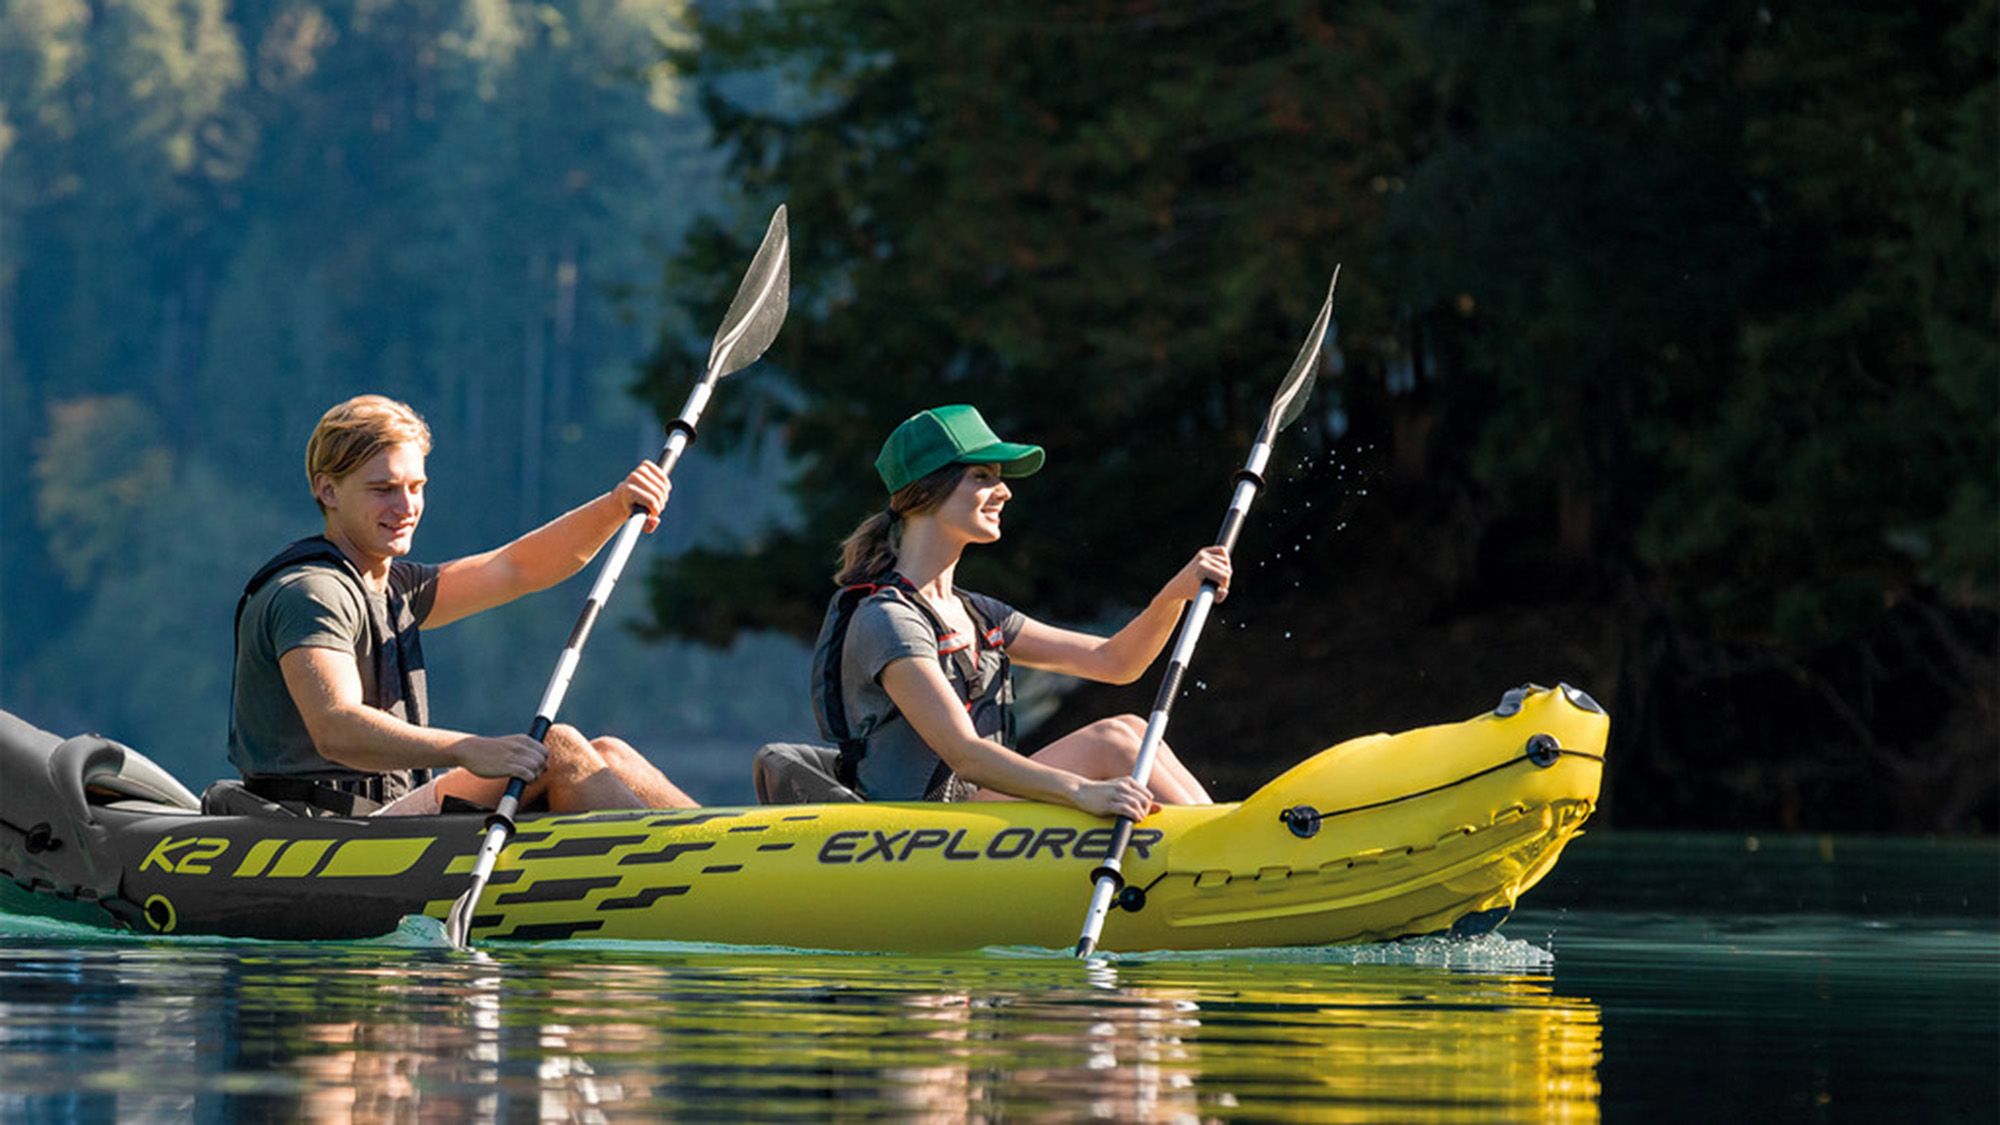 Inflatable Kayak Gear Organization